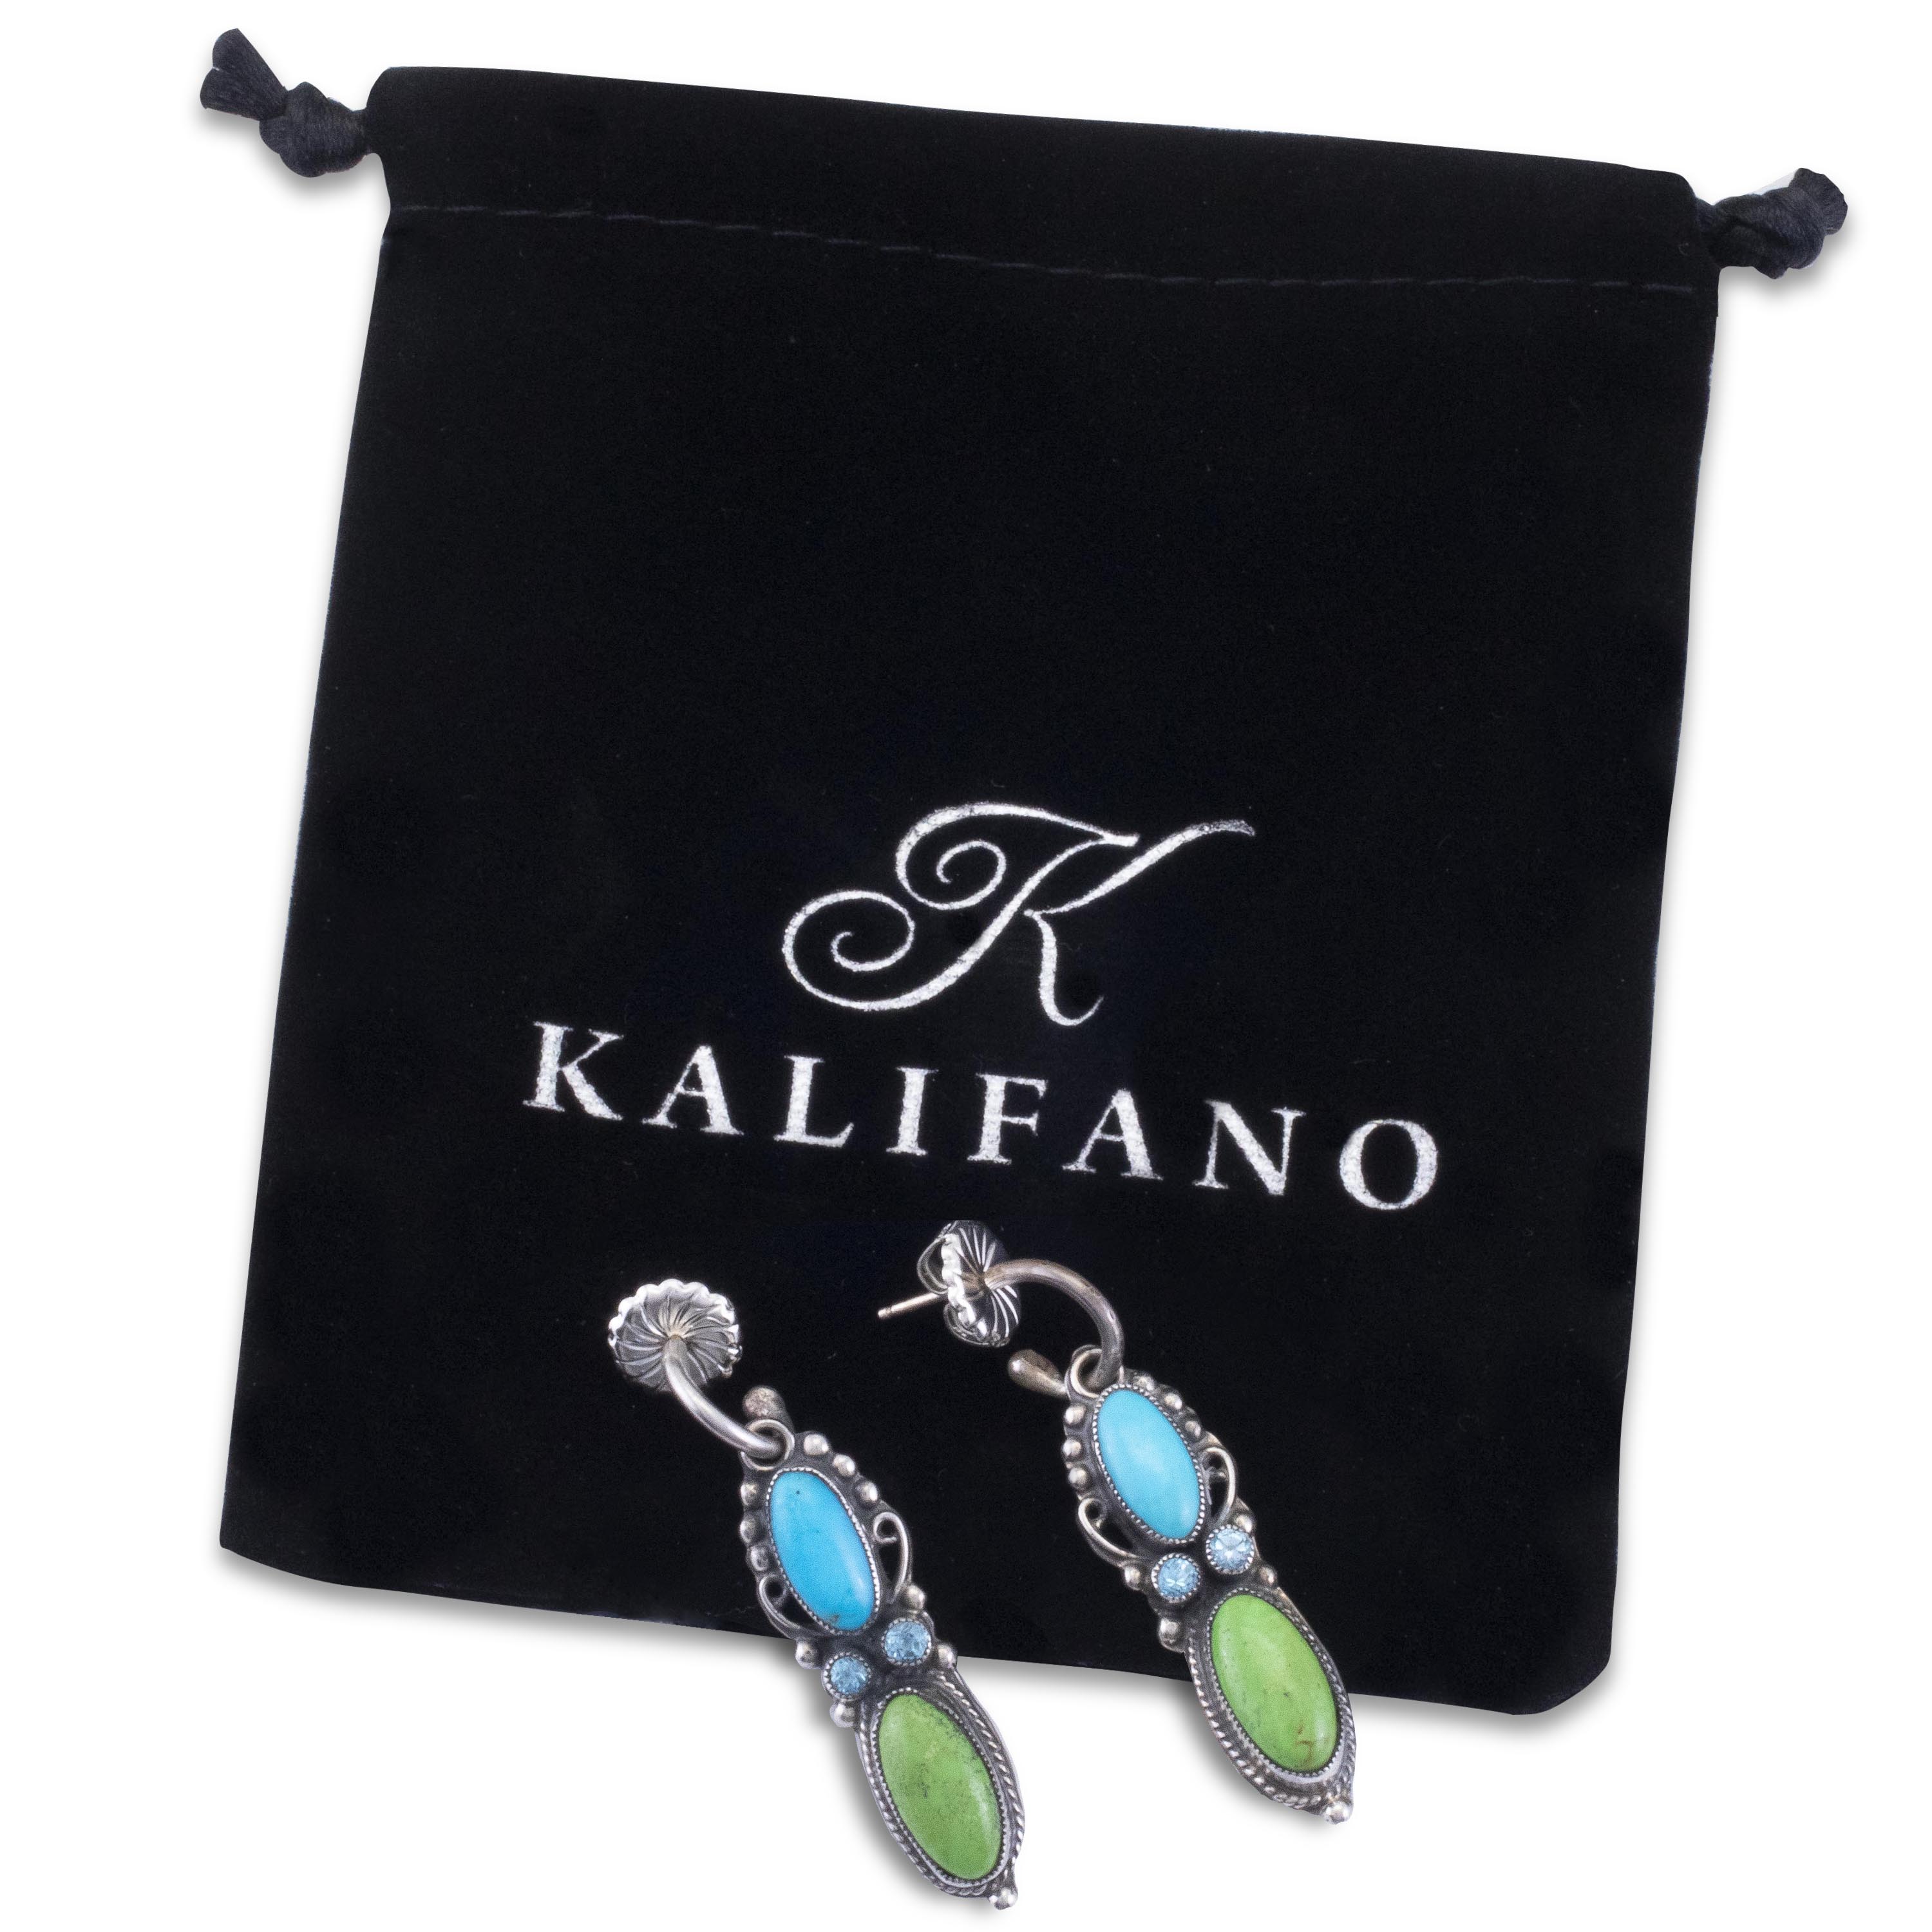 Kalifano Native American Jewelry Leo Feeney Navajo Sleeping Beauty Turquoise, Gaspite, and Blue Topaz USA Native American Made 925 Sterling Silver Dangly Earrings NAE1200.009